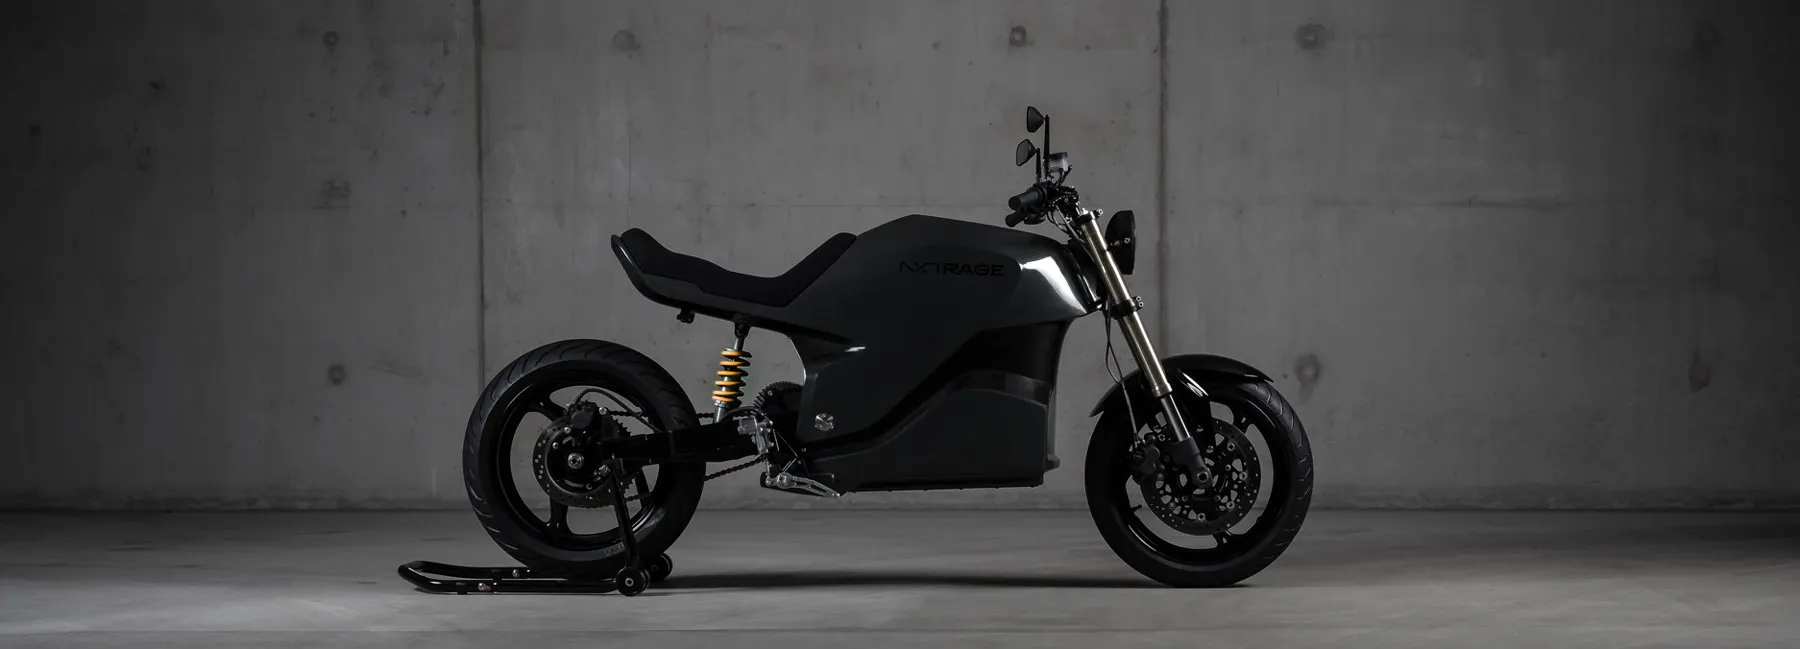 nxt motors unveils electric motorcycle with carbon rage fiber monocoque designboom 1800